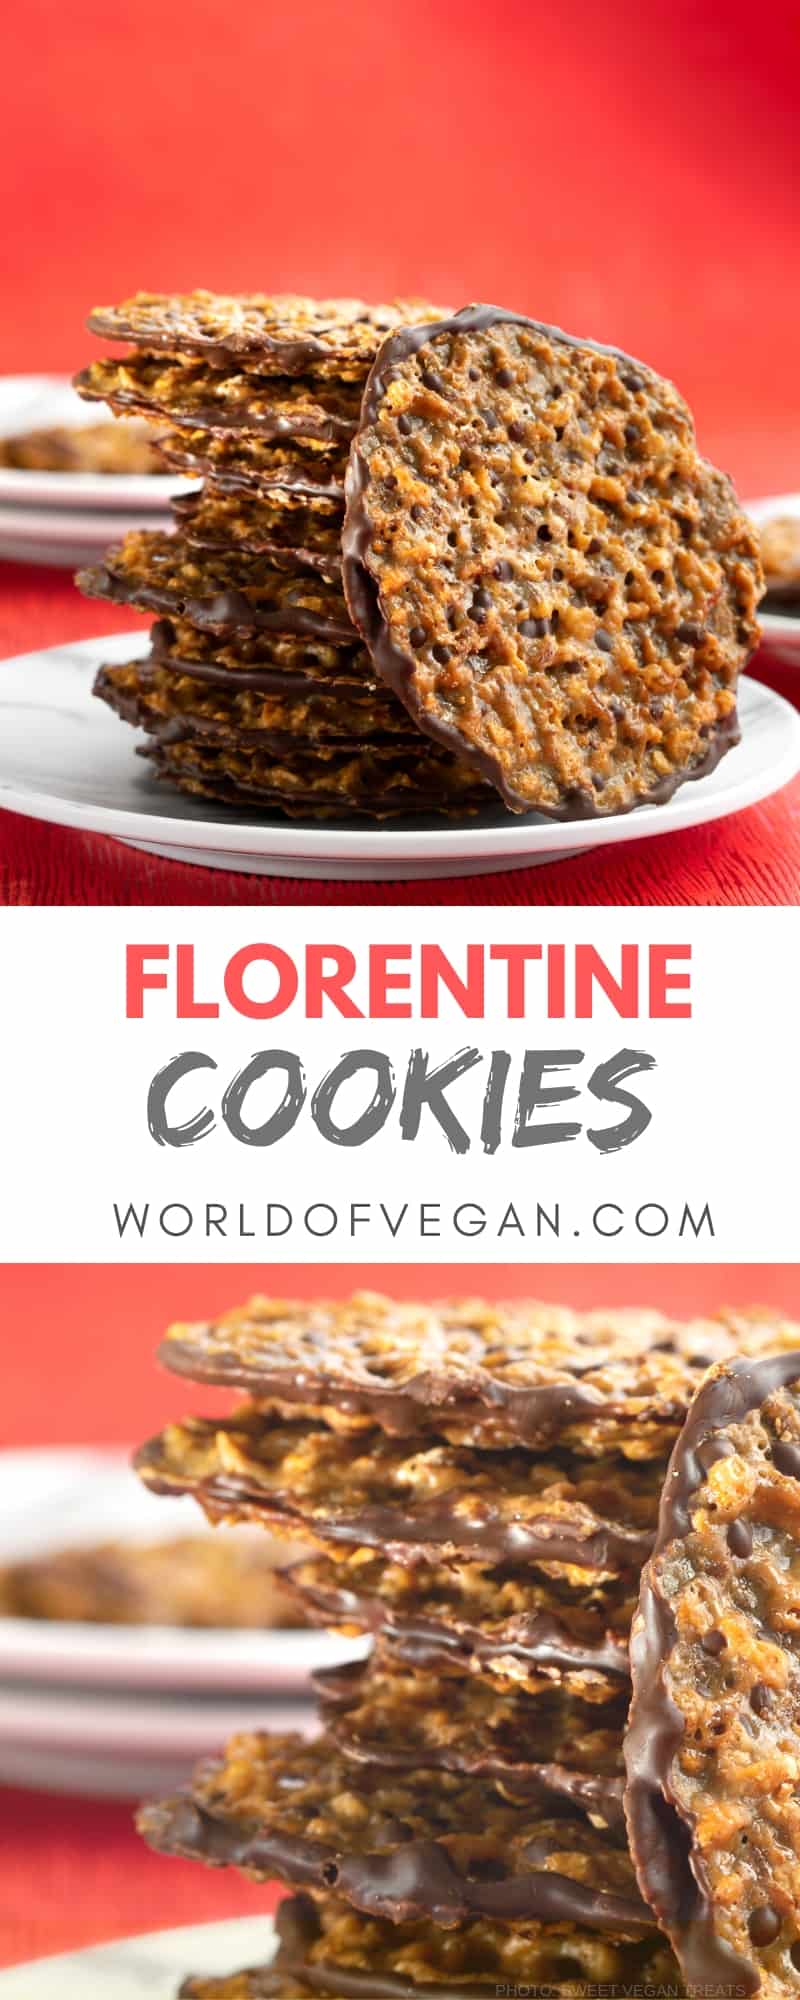 Vegan Florentine Cookies | World of Vegan | #cookies #vegan #florentine #lace #chocolate #baking #worldofvegan